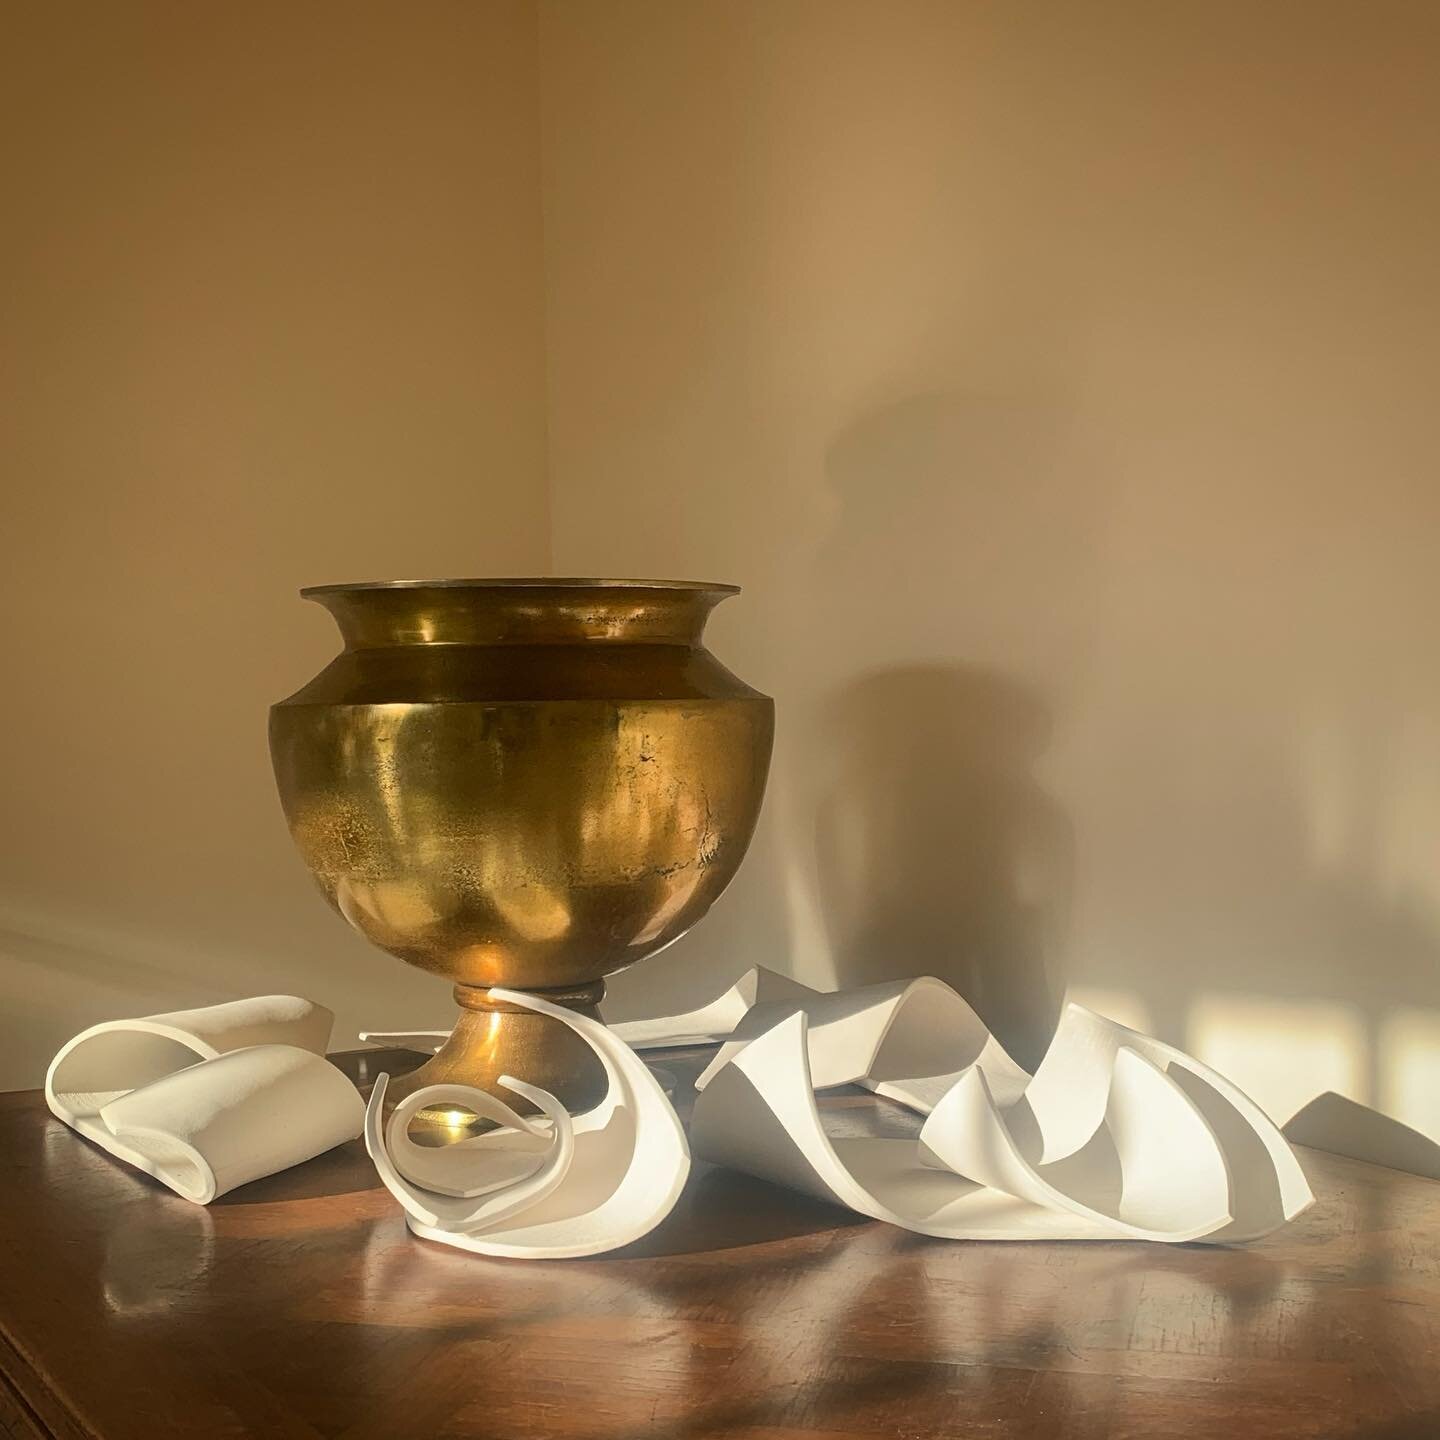 a modern-day still life (porcelain sculptural components and brass urn in the golden hour) #stilllifephotography #golden #lauraclarkartistry